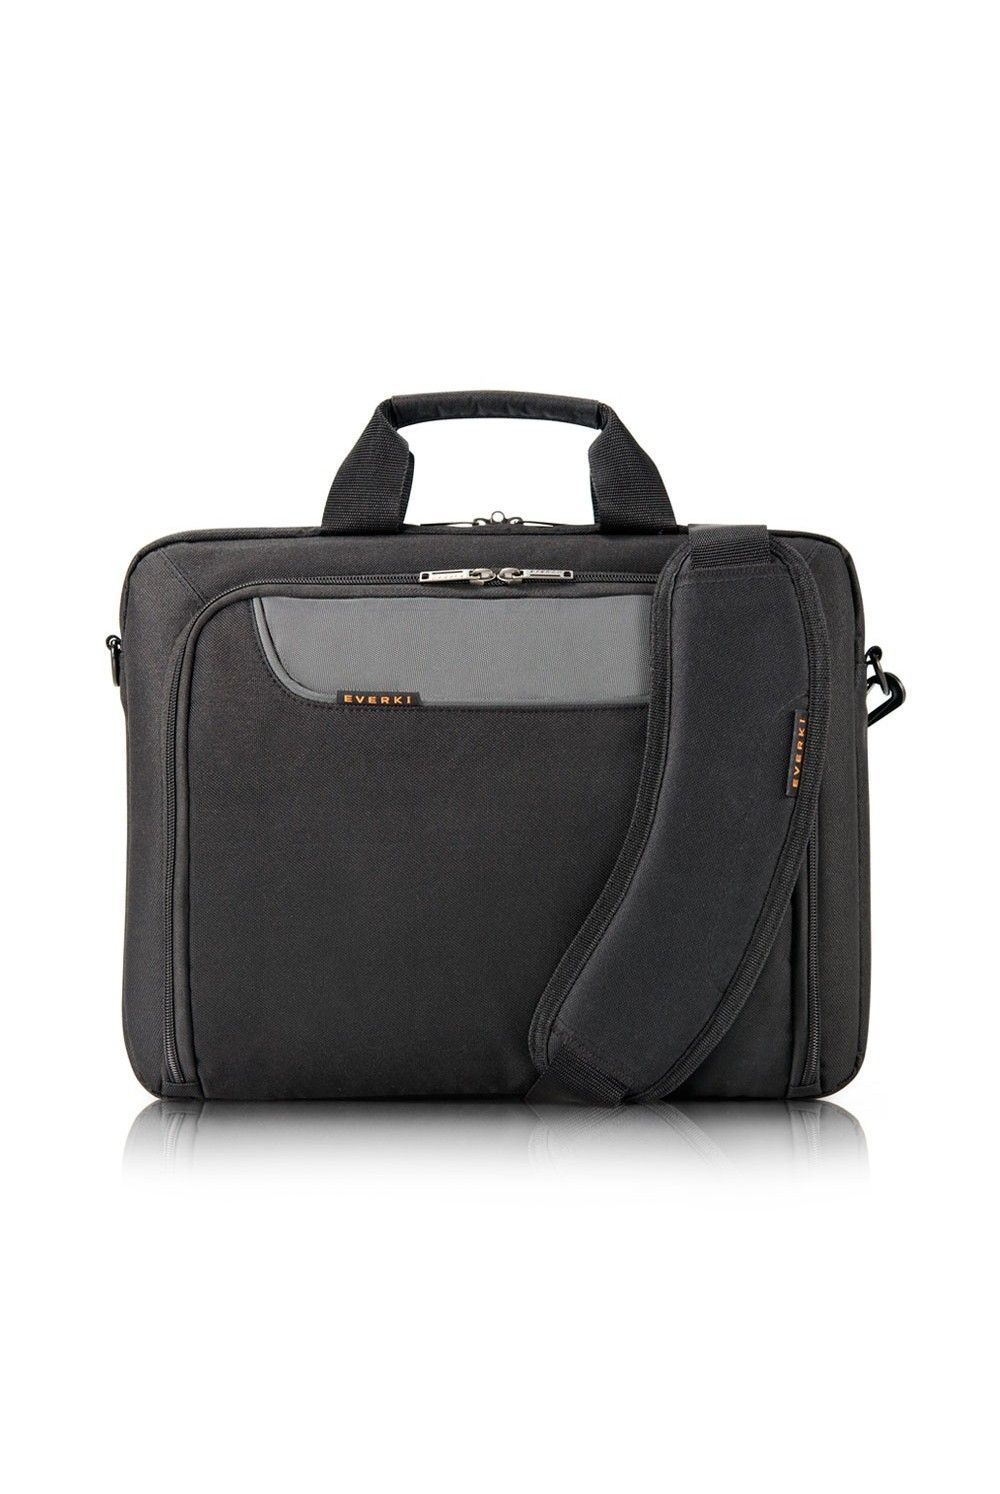 Laptop bag Advance Everki 14.1 inches